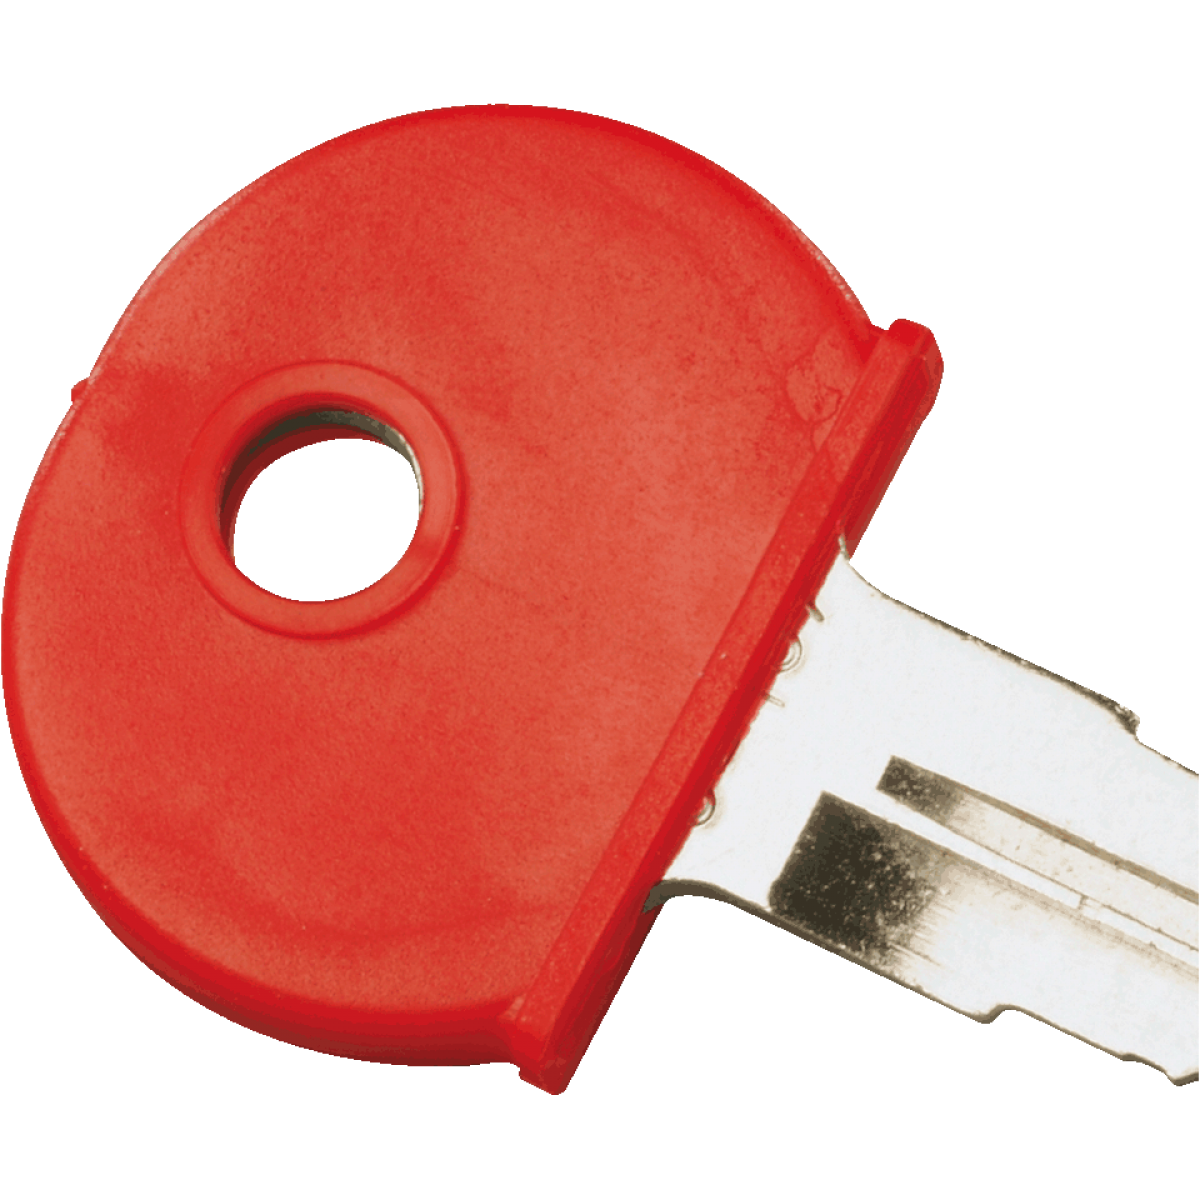 Schlüsselkappen, farbig sortiert, Kunststoff, 25x19mm, 25/VE, 25 Stück